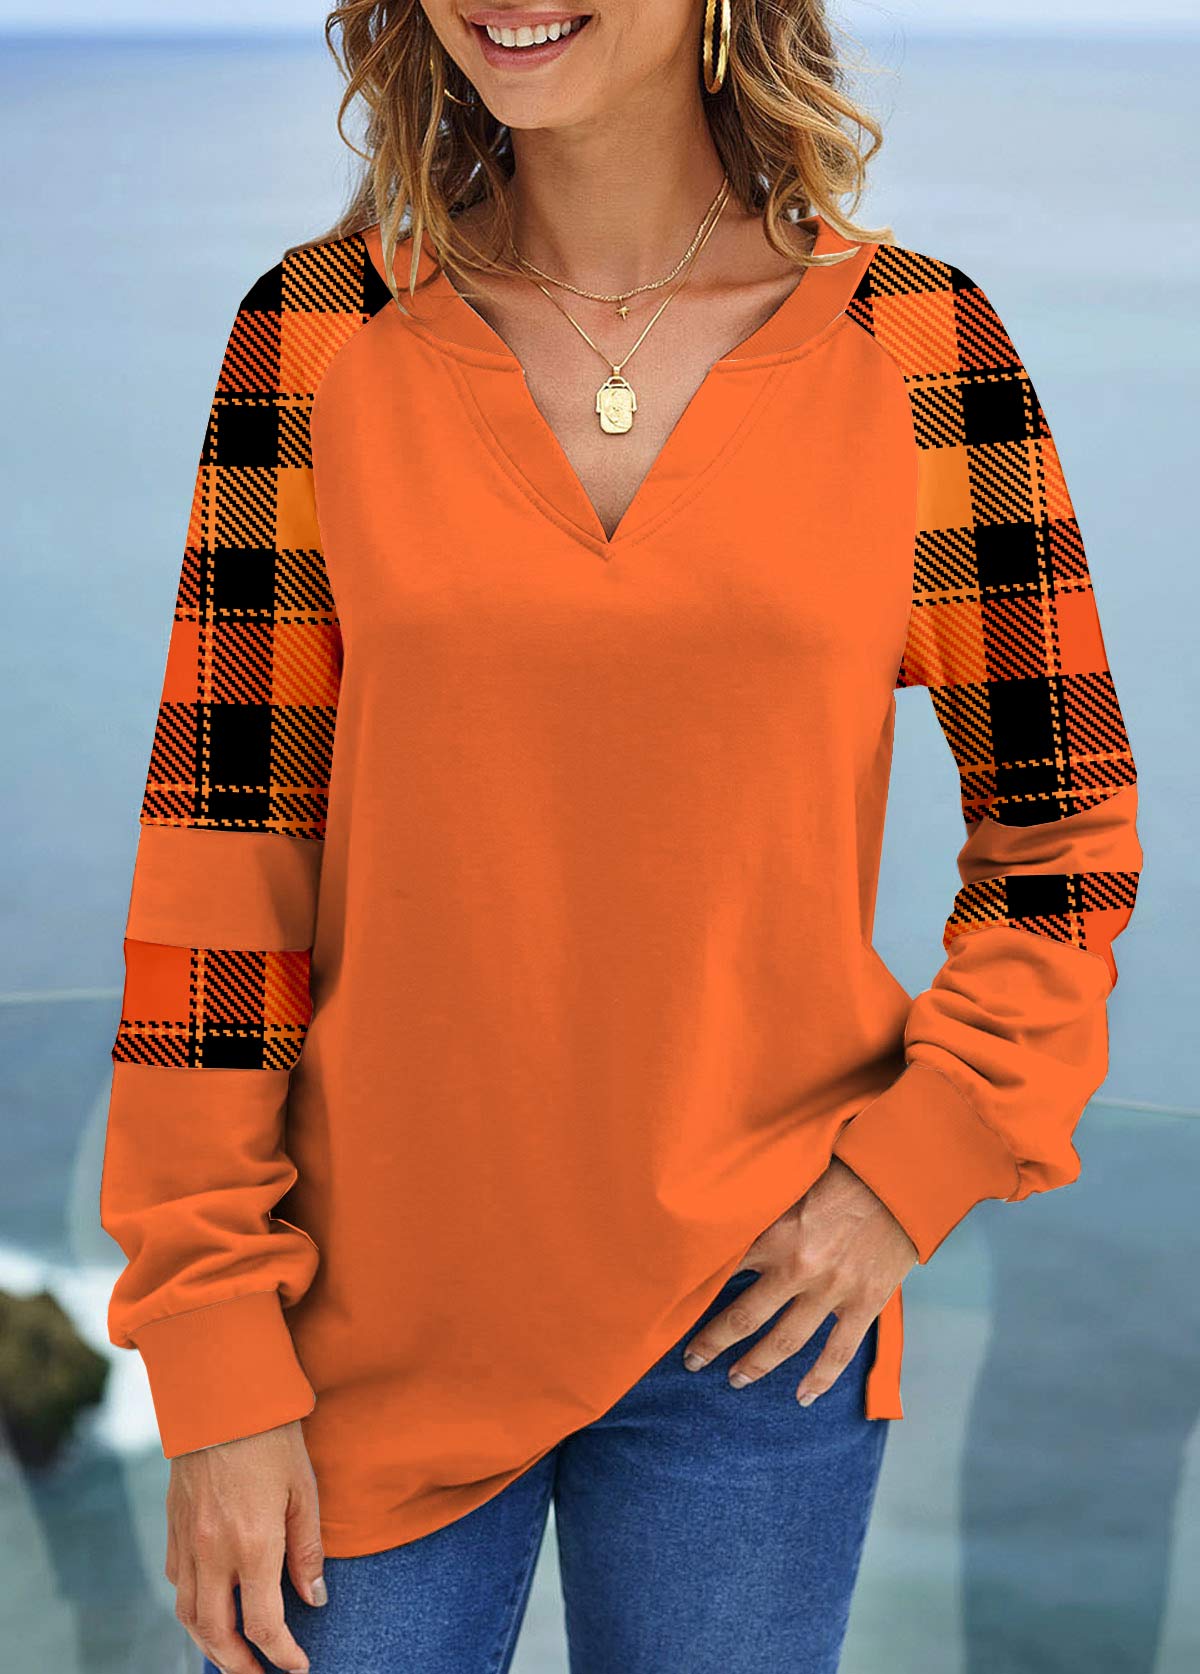 Tartan Print Long Sleeve Orange Halloween Sweatshirt